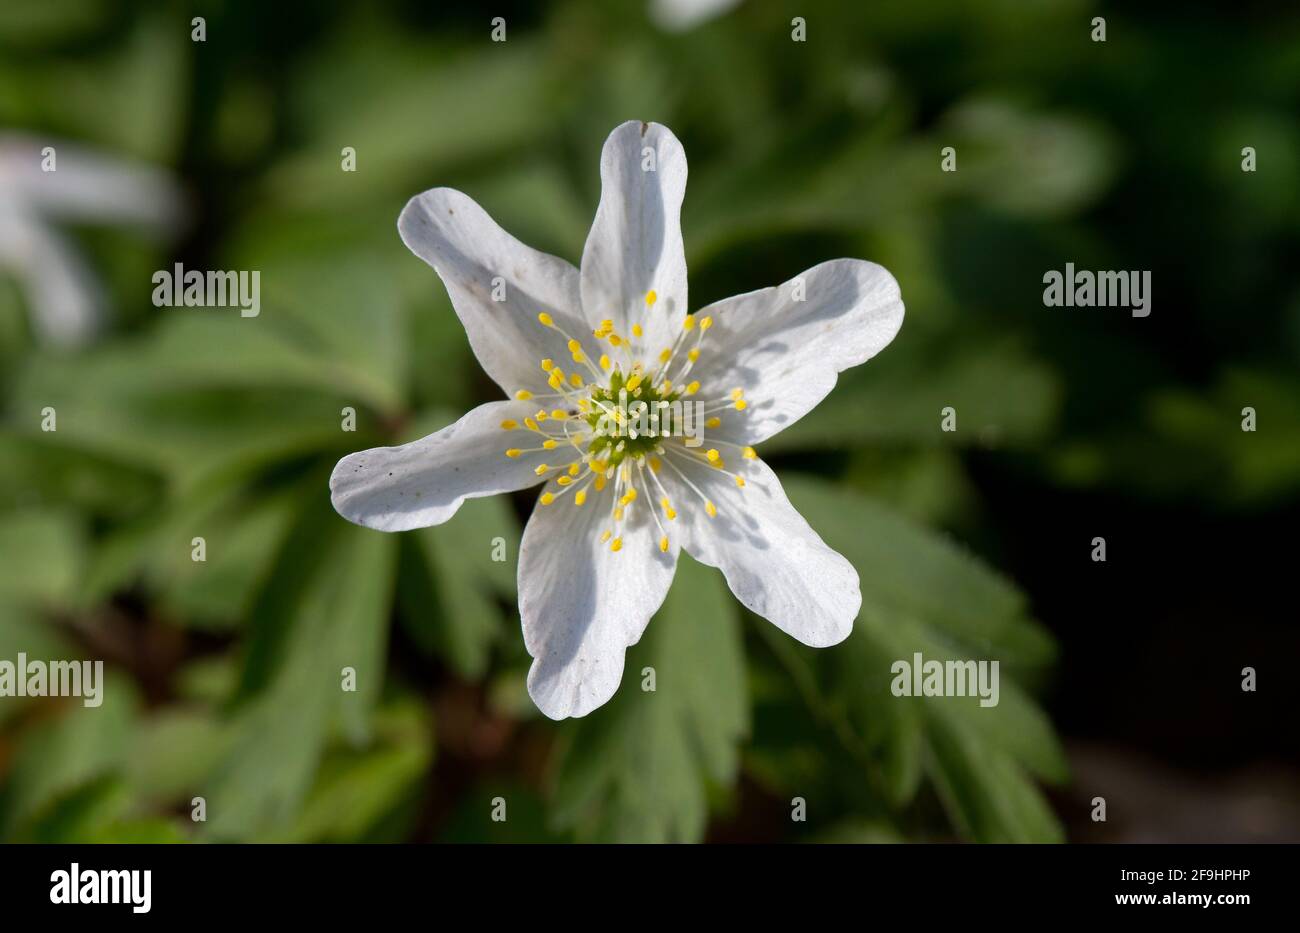 Bel fiore bianco di anemone di legno Foto Stock